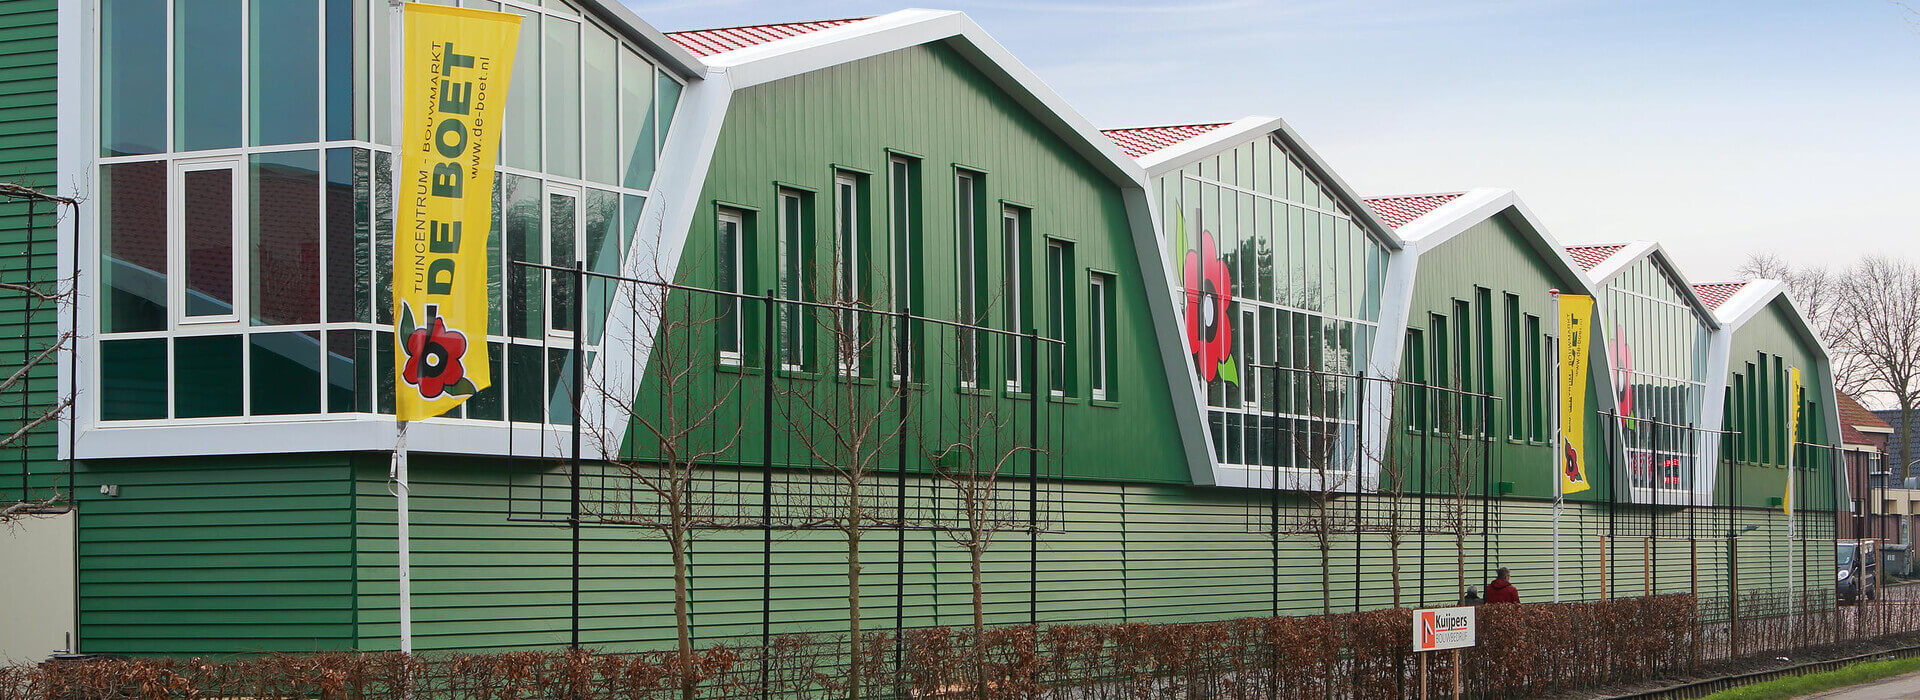 Revitalization Garden Center De Boet, Hoogwoud (the Netherlands) 2014